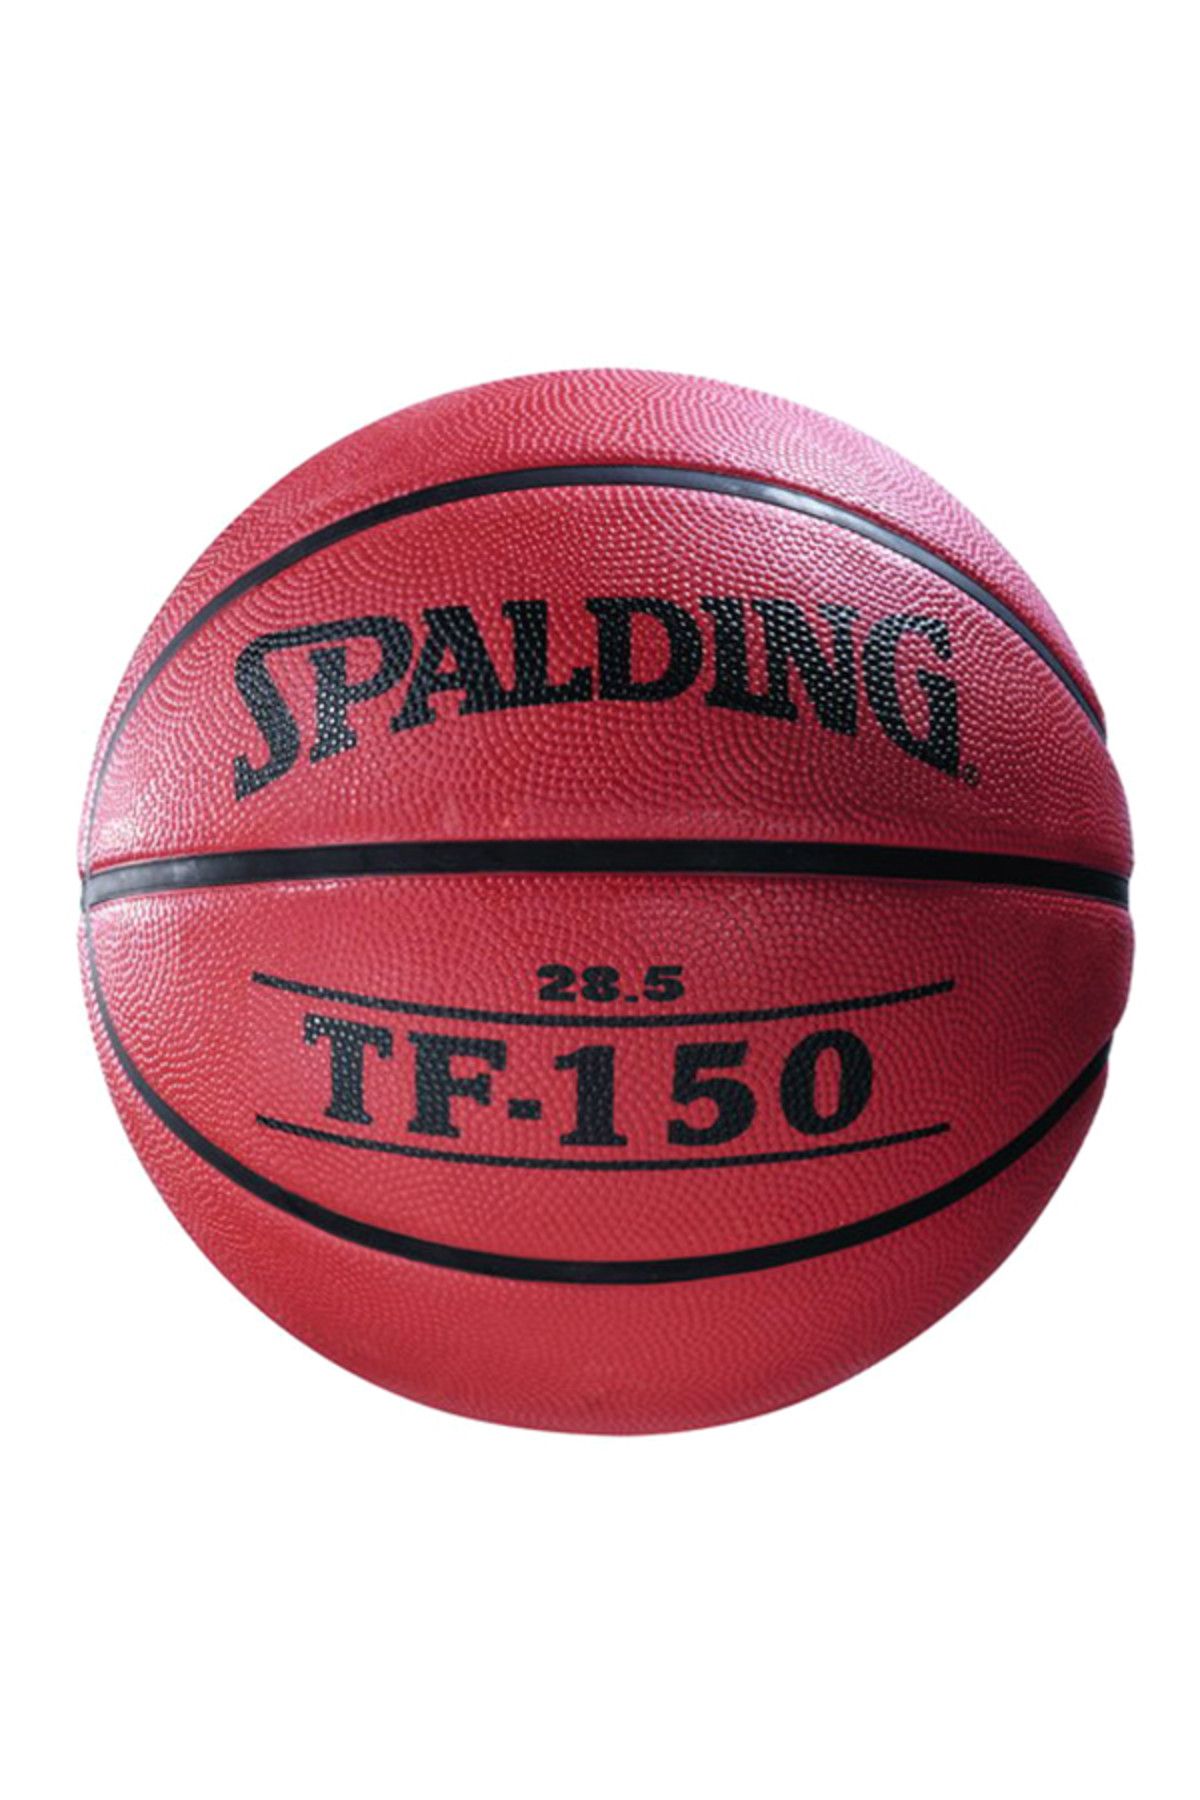 Spalding TF-150 No:6 Basket Topu